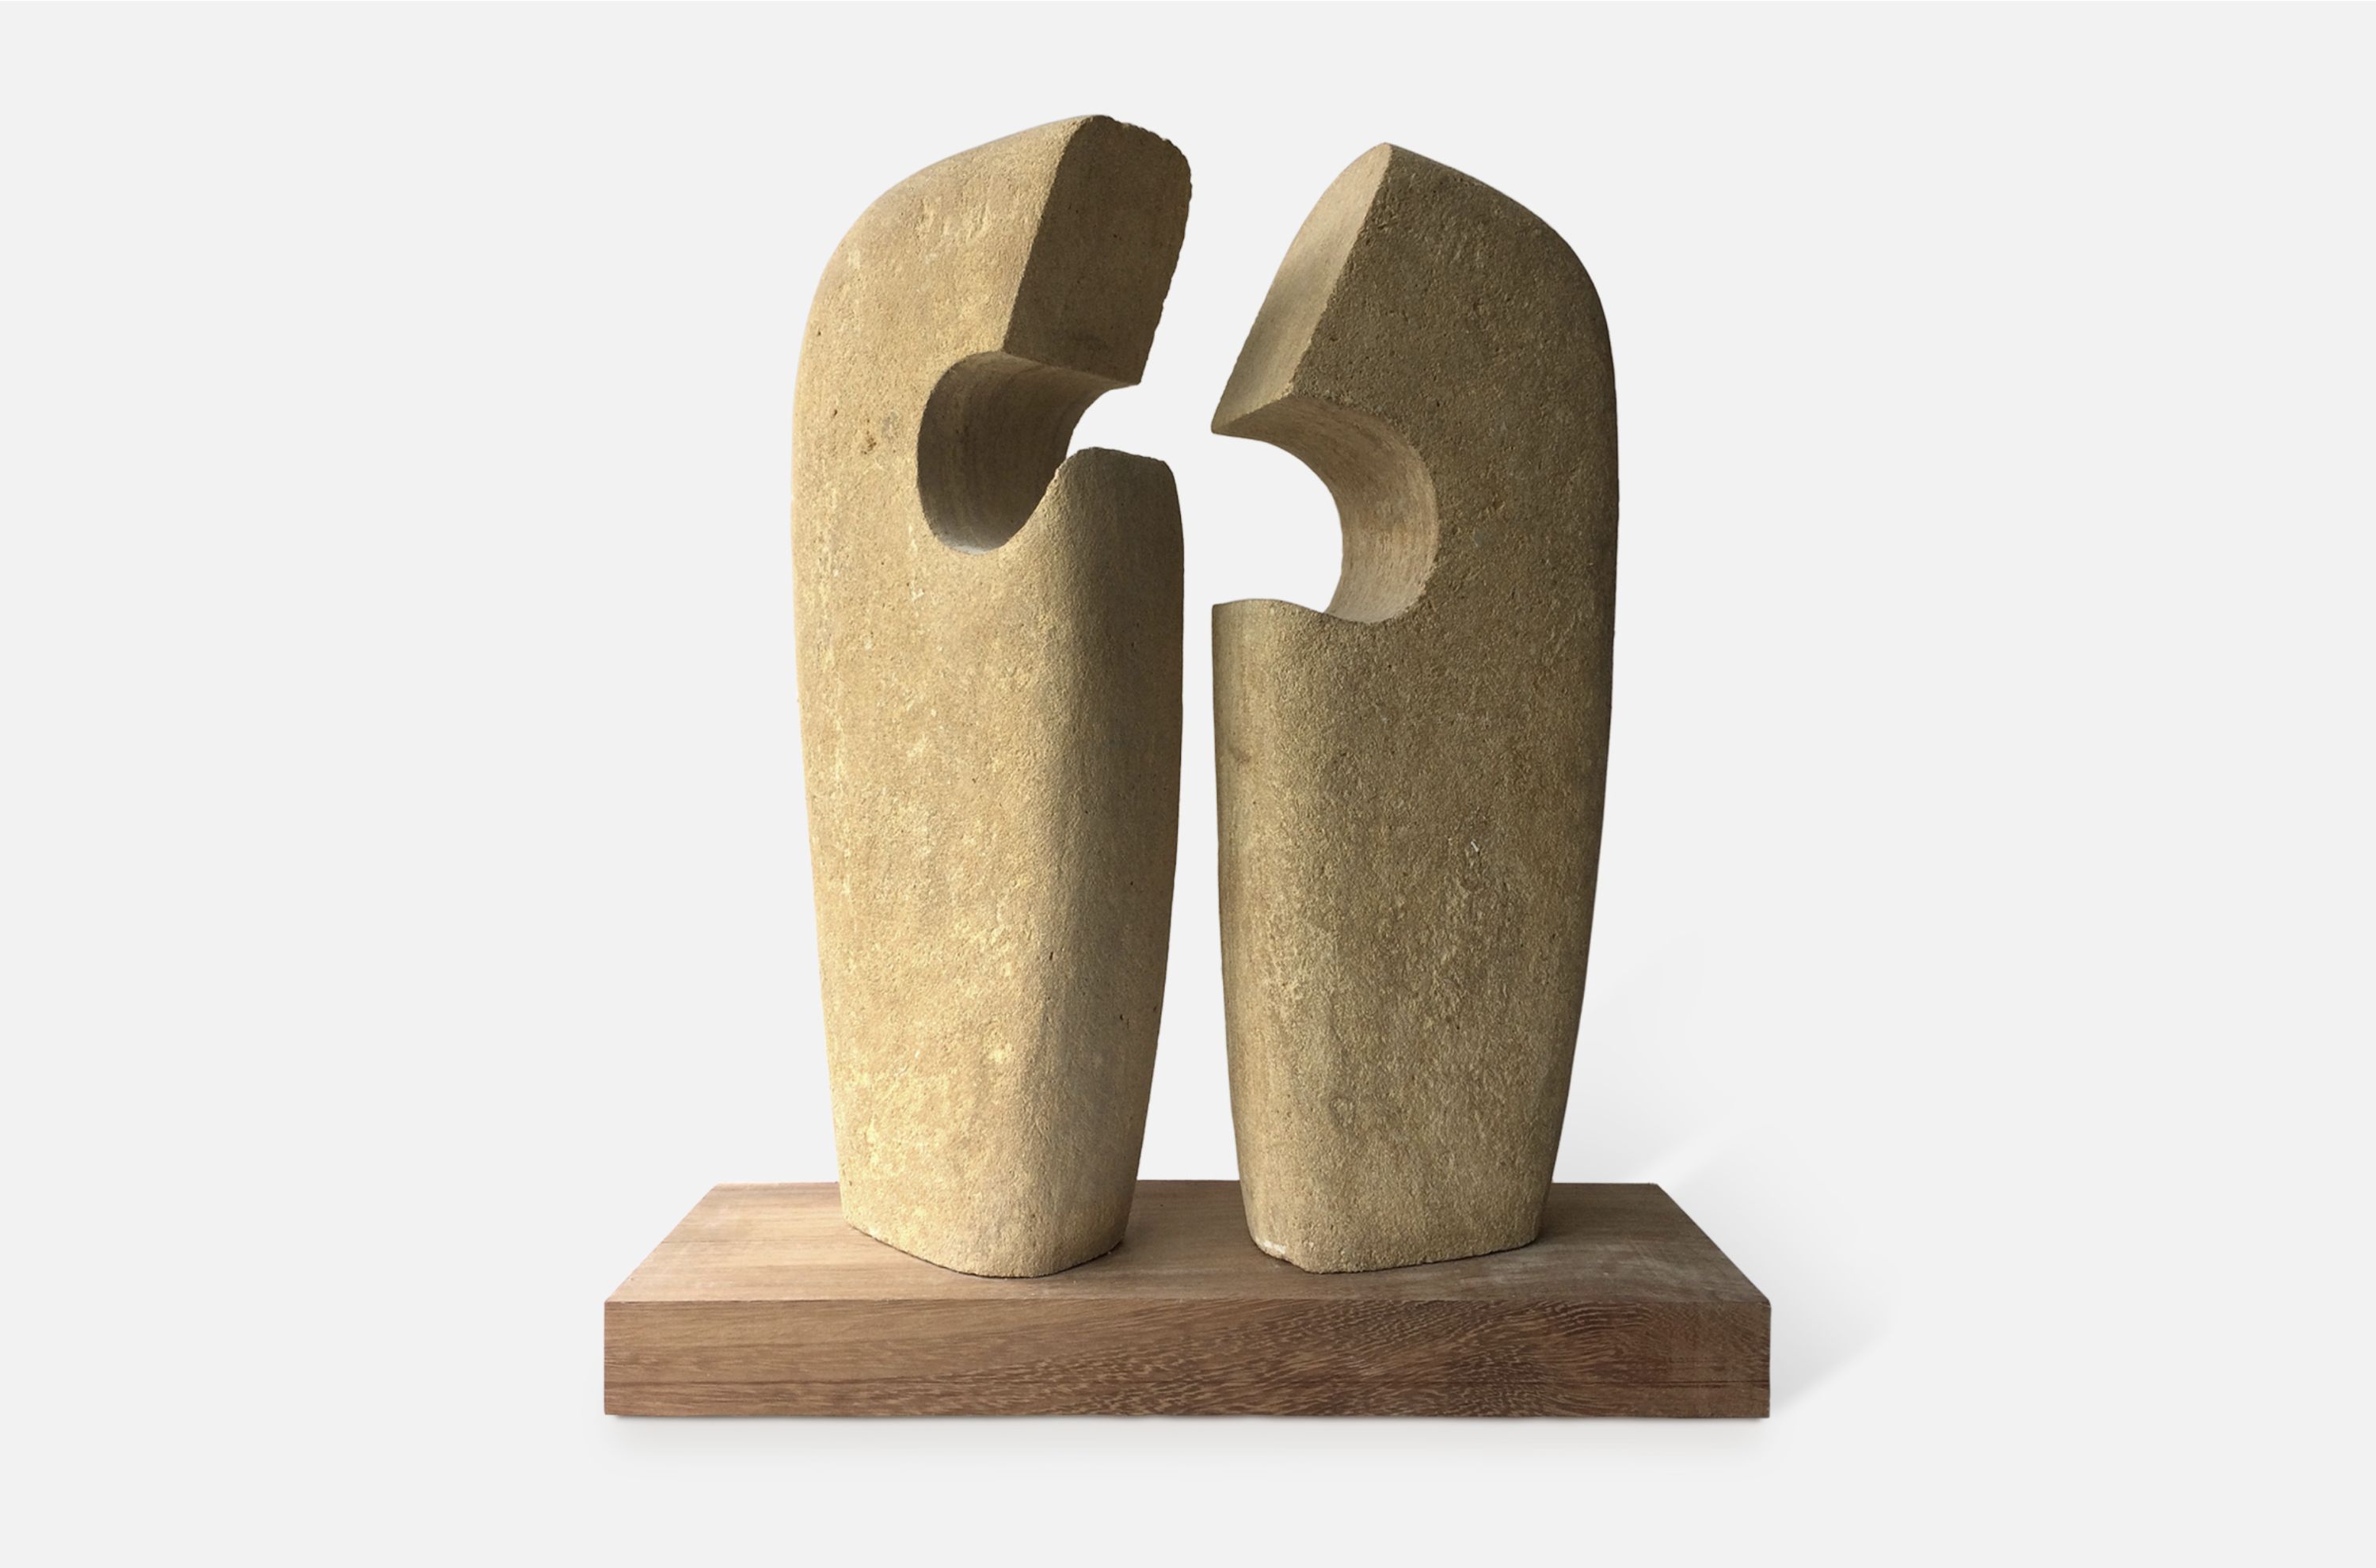 Bernard McGuigan, (b.1956), Communication/Conversation Piece, 2014-15, limestone on hardwood base, 45 x 20 x 20 cm.